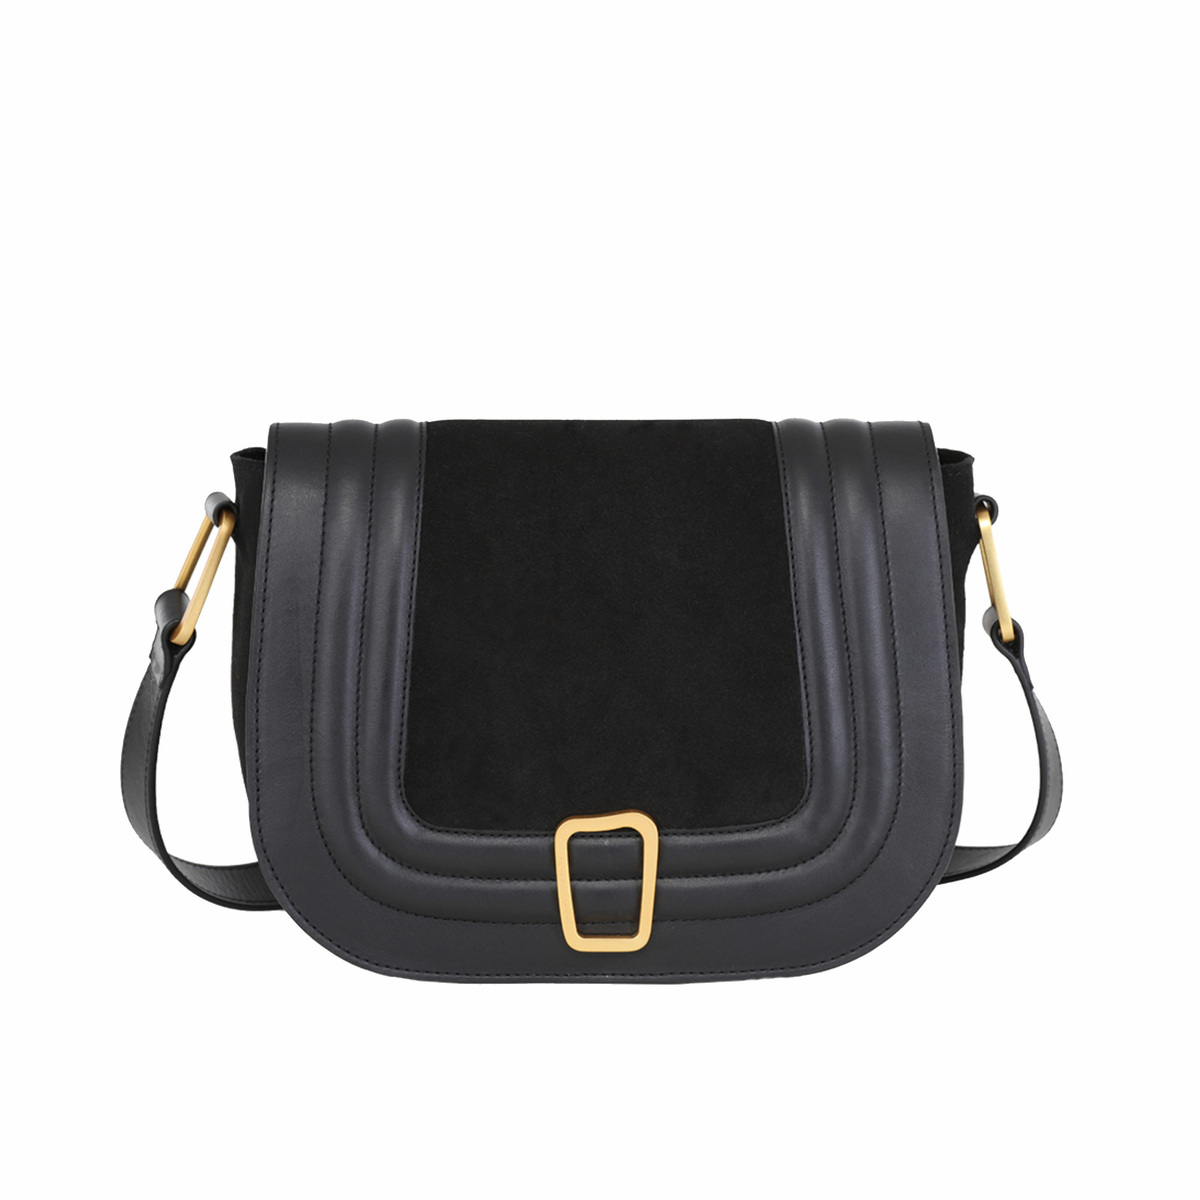 Shoulder bag Barth, Black Classic - W25.5 x H22 x D7 cm - 100% leather  - image 1